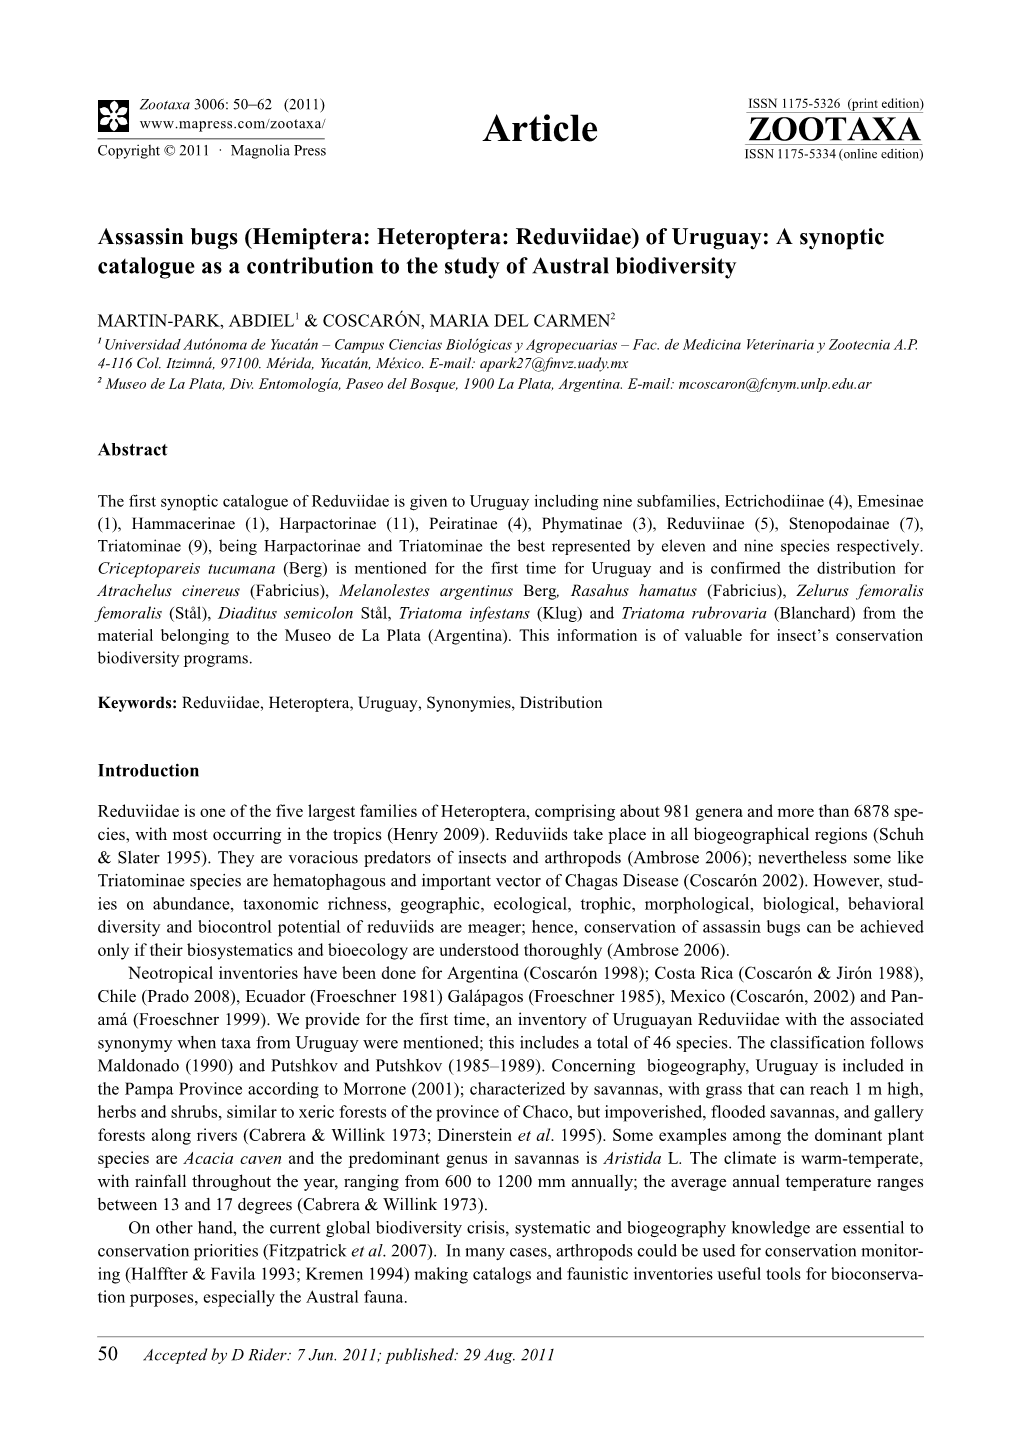 Hemiptera: Heteroptera: Reduviidae) of Uruguay: a Synoptic Catalogue As a Contribution to the Study of Austral Biodiversity